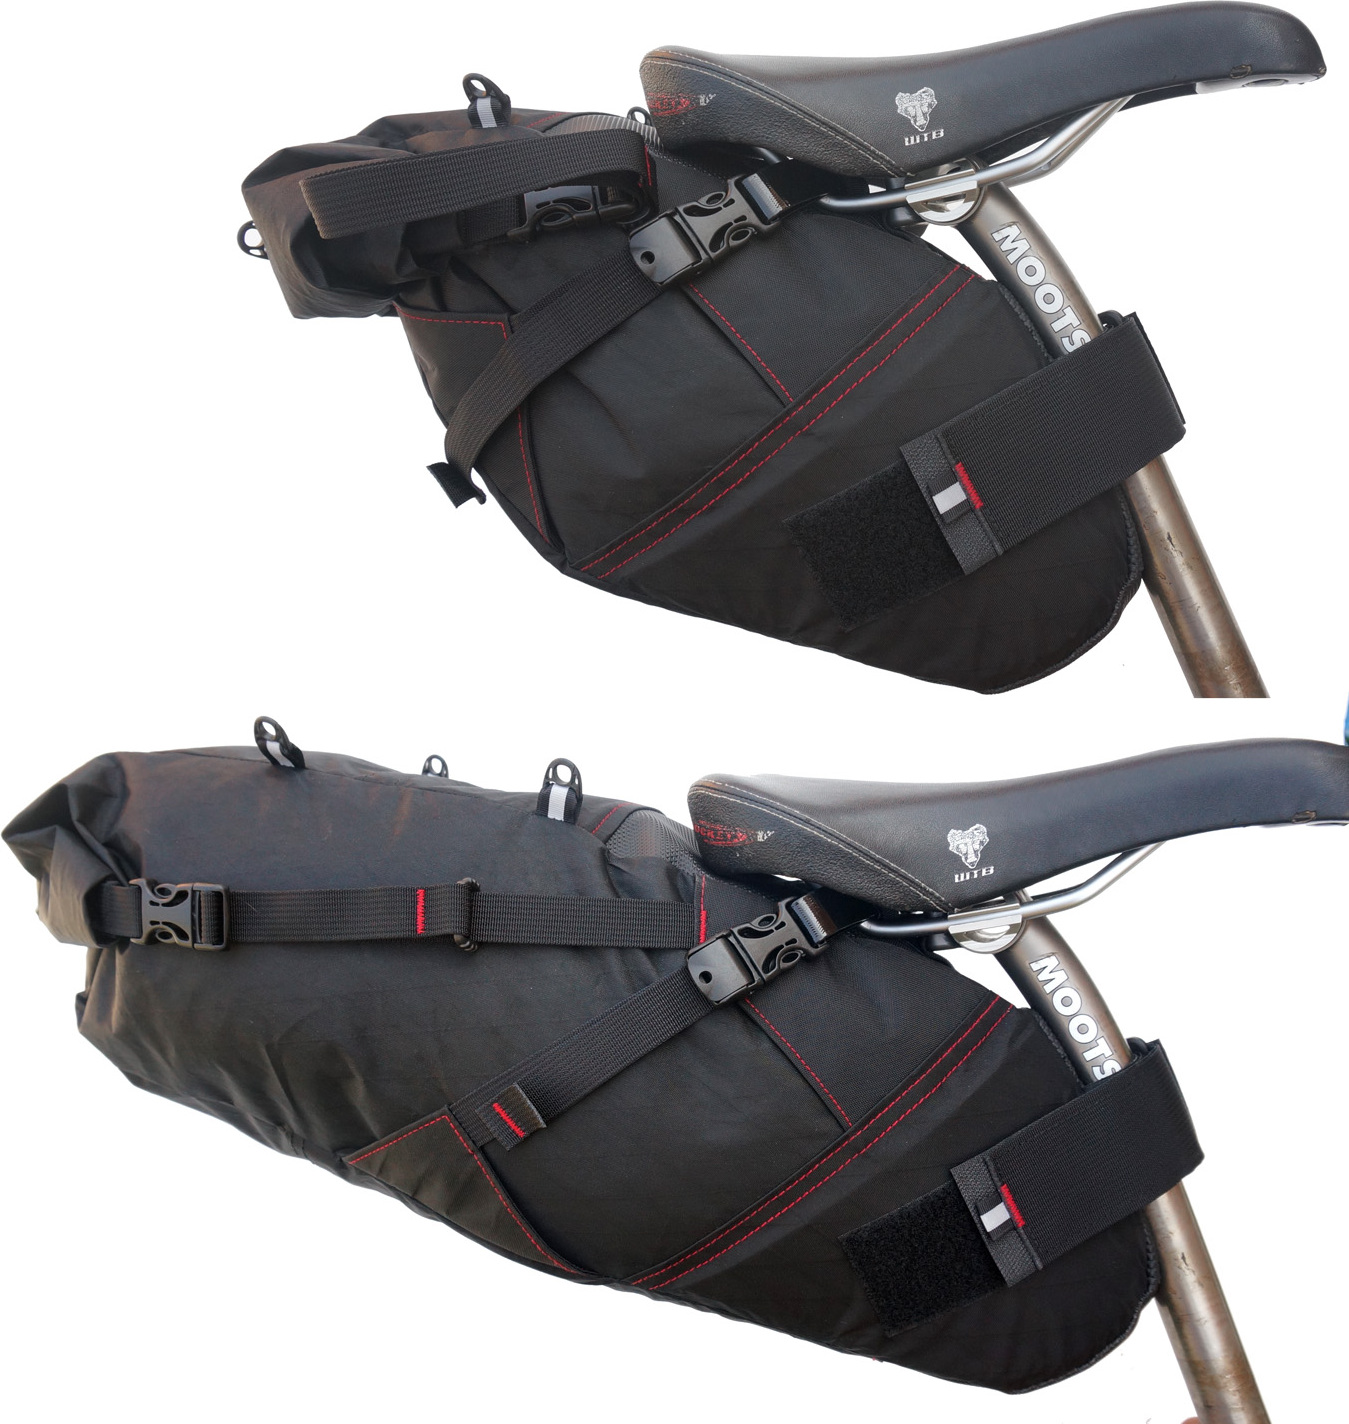 Revelate Designs Pika Seat Bag in Tree Fort Bikes Saddle Bags